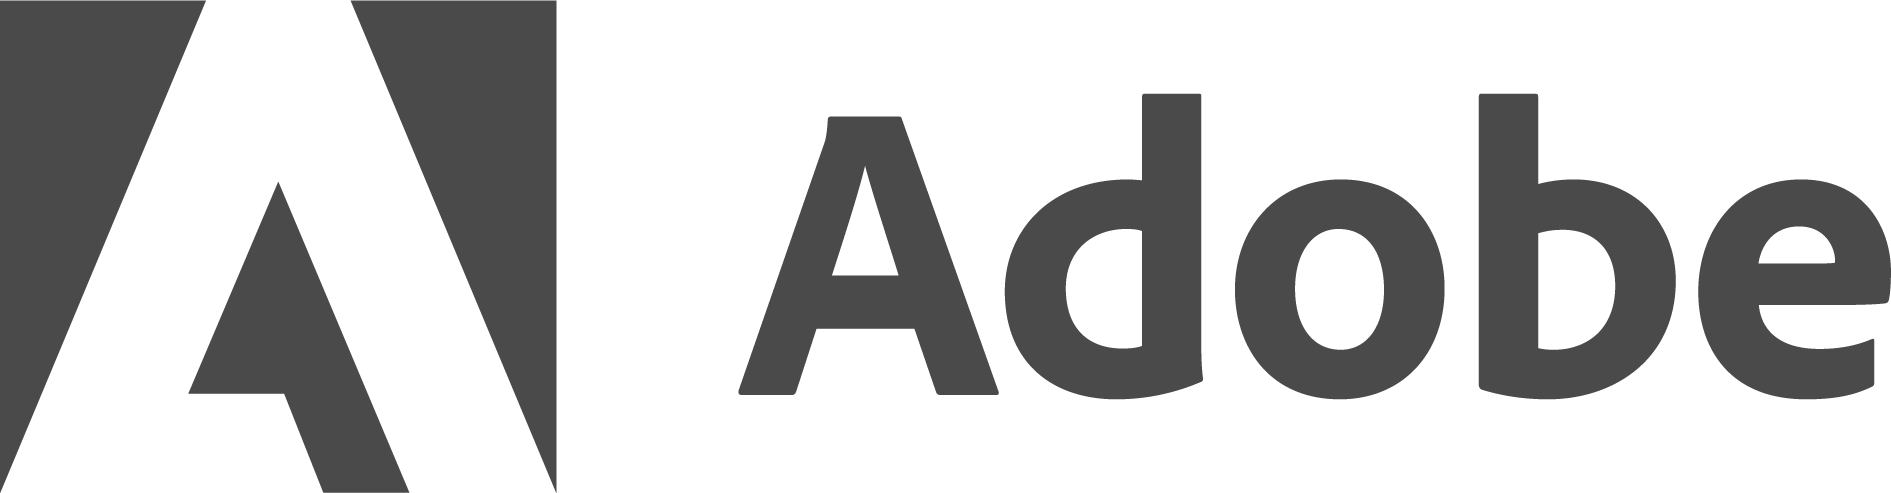 Adobe_Corporate